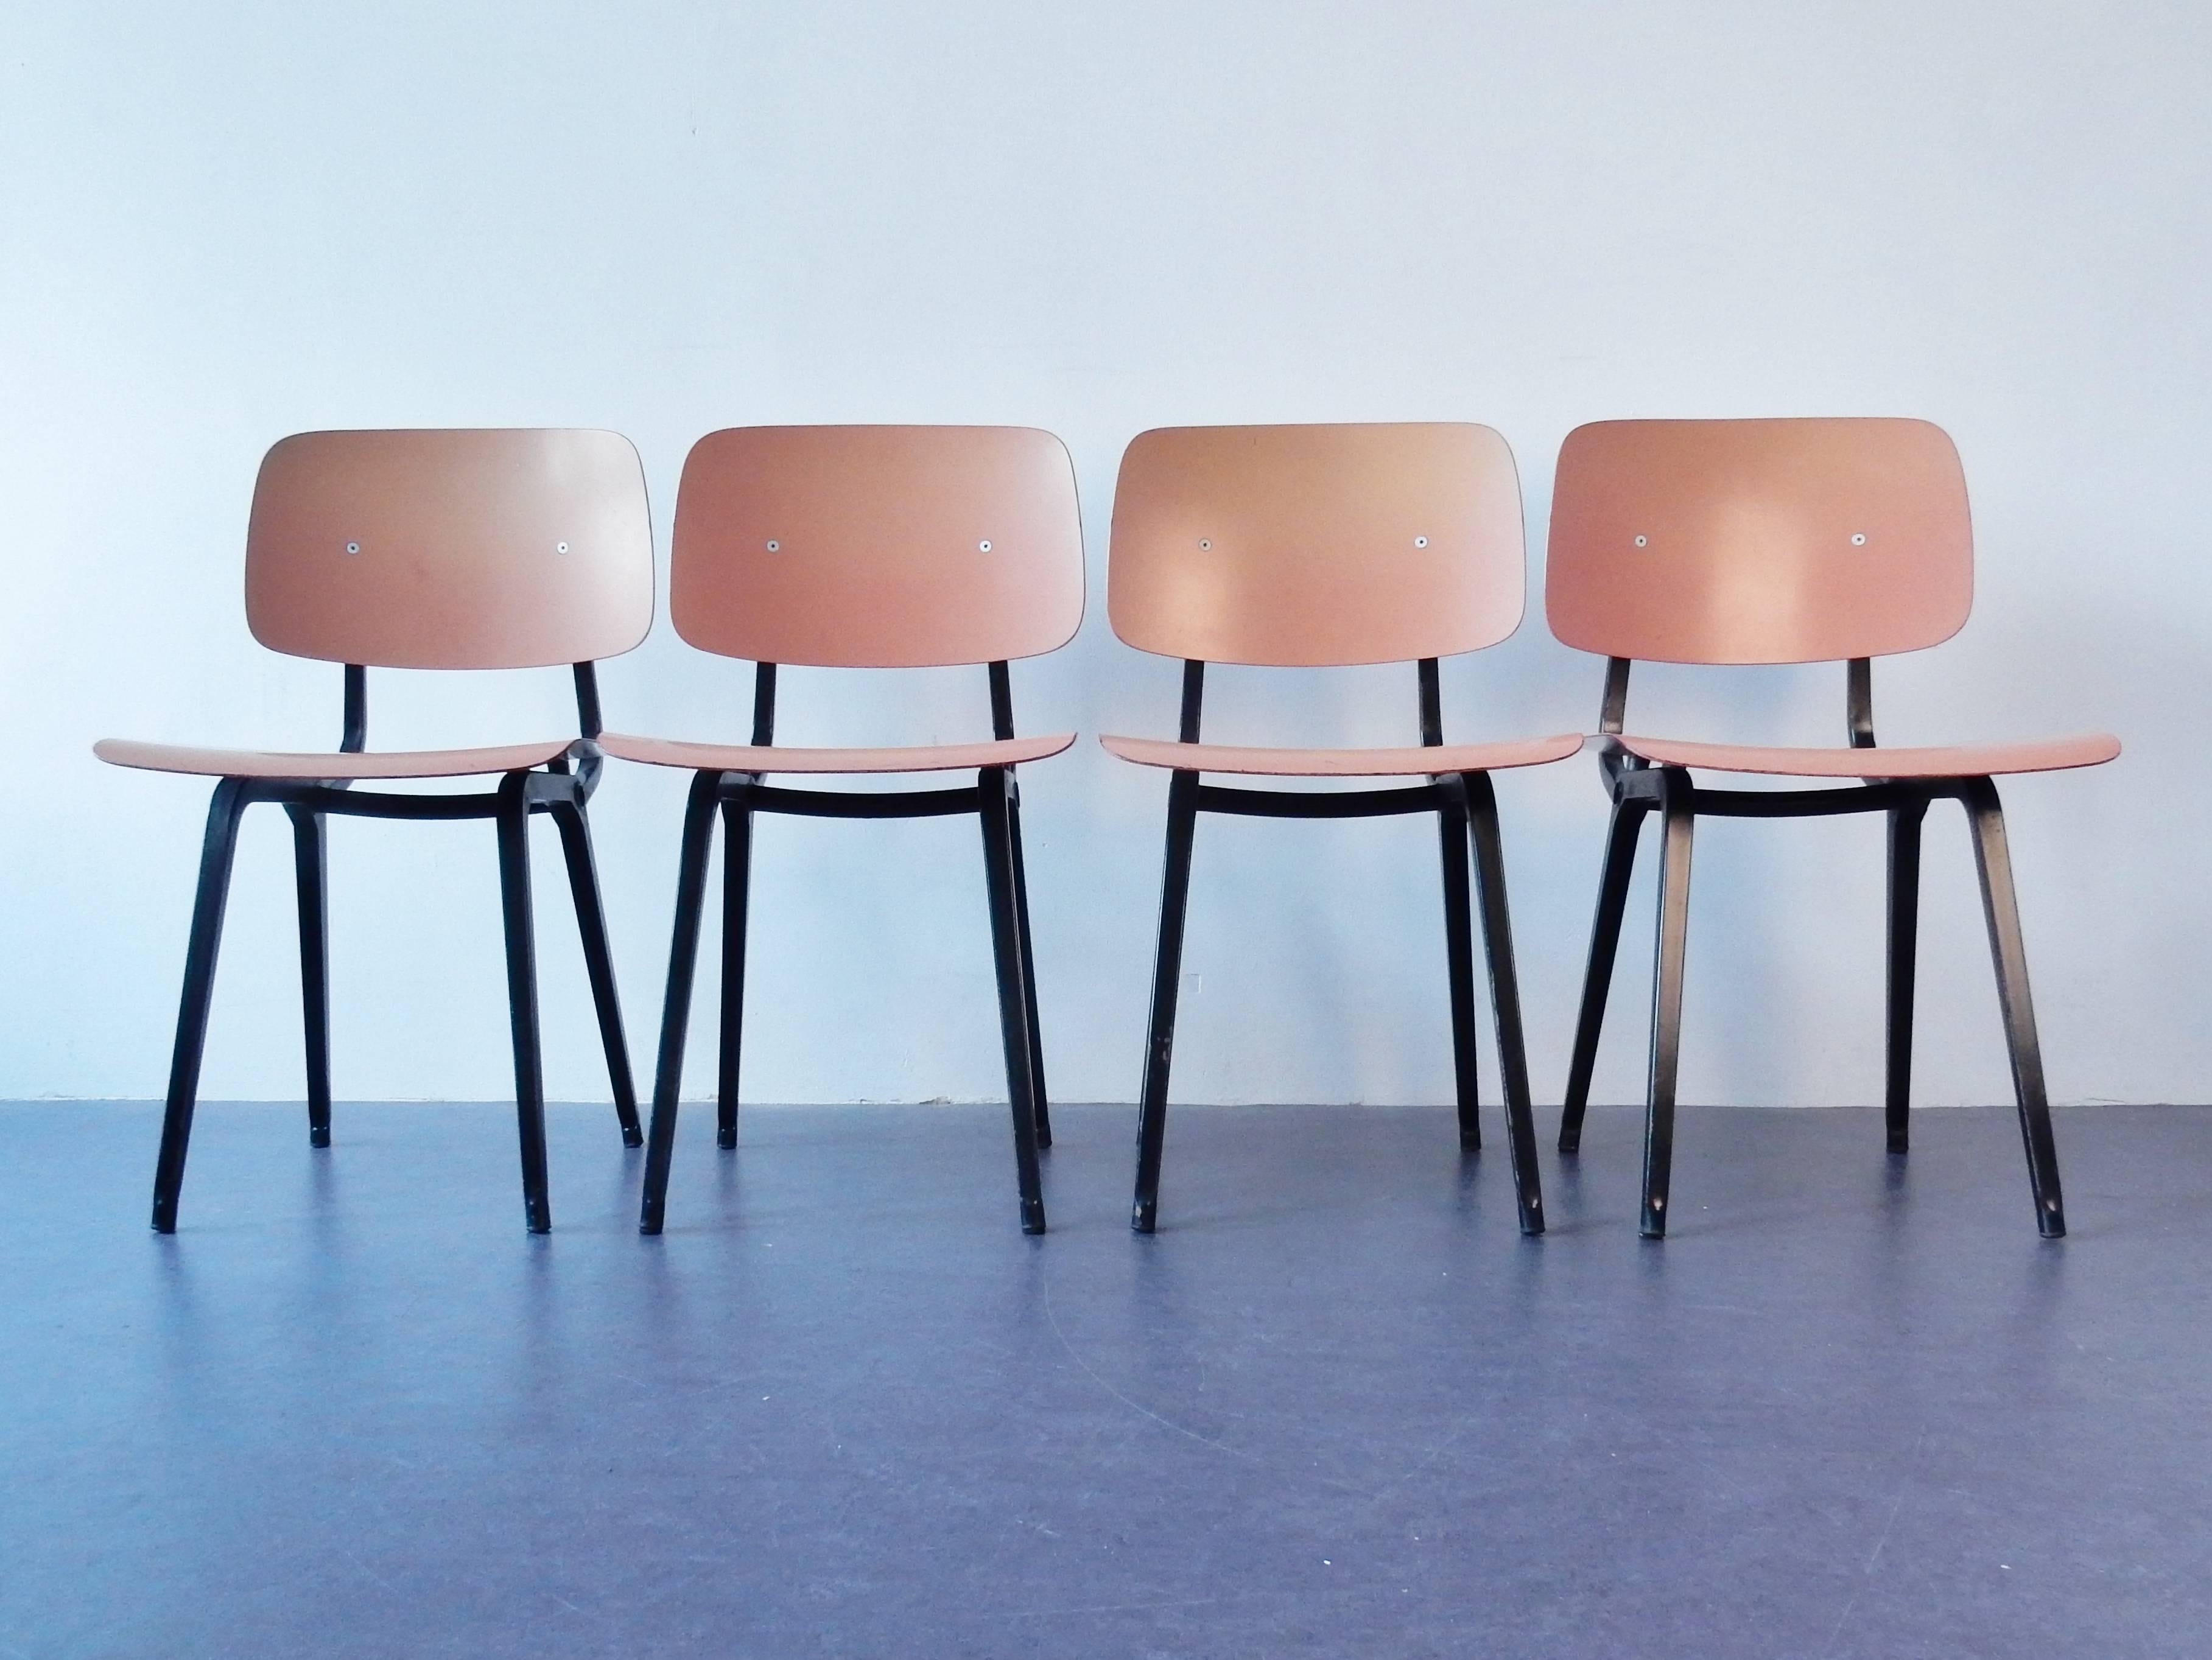 Dutch Set of Four Industrial Chairs, Model Revolt by Friso Kramer for Ahrend de Cirkel